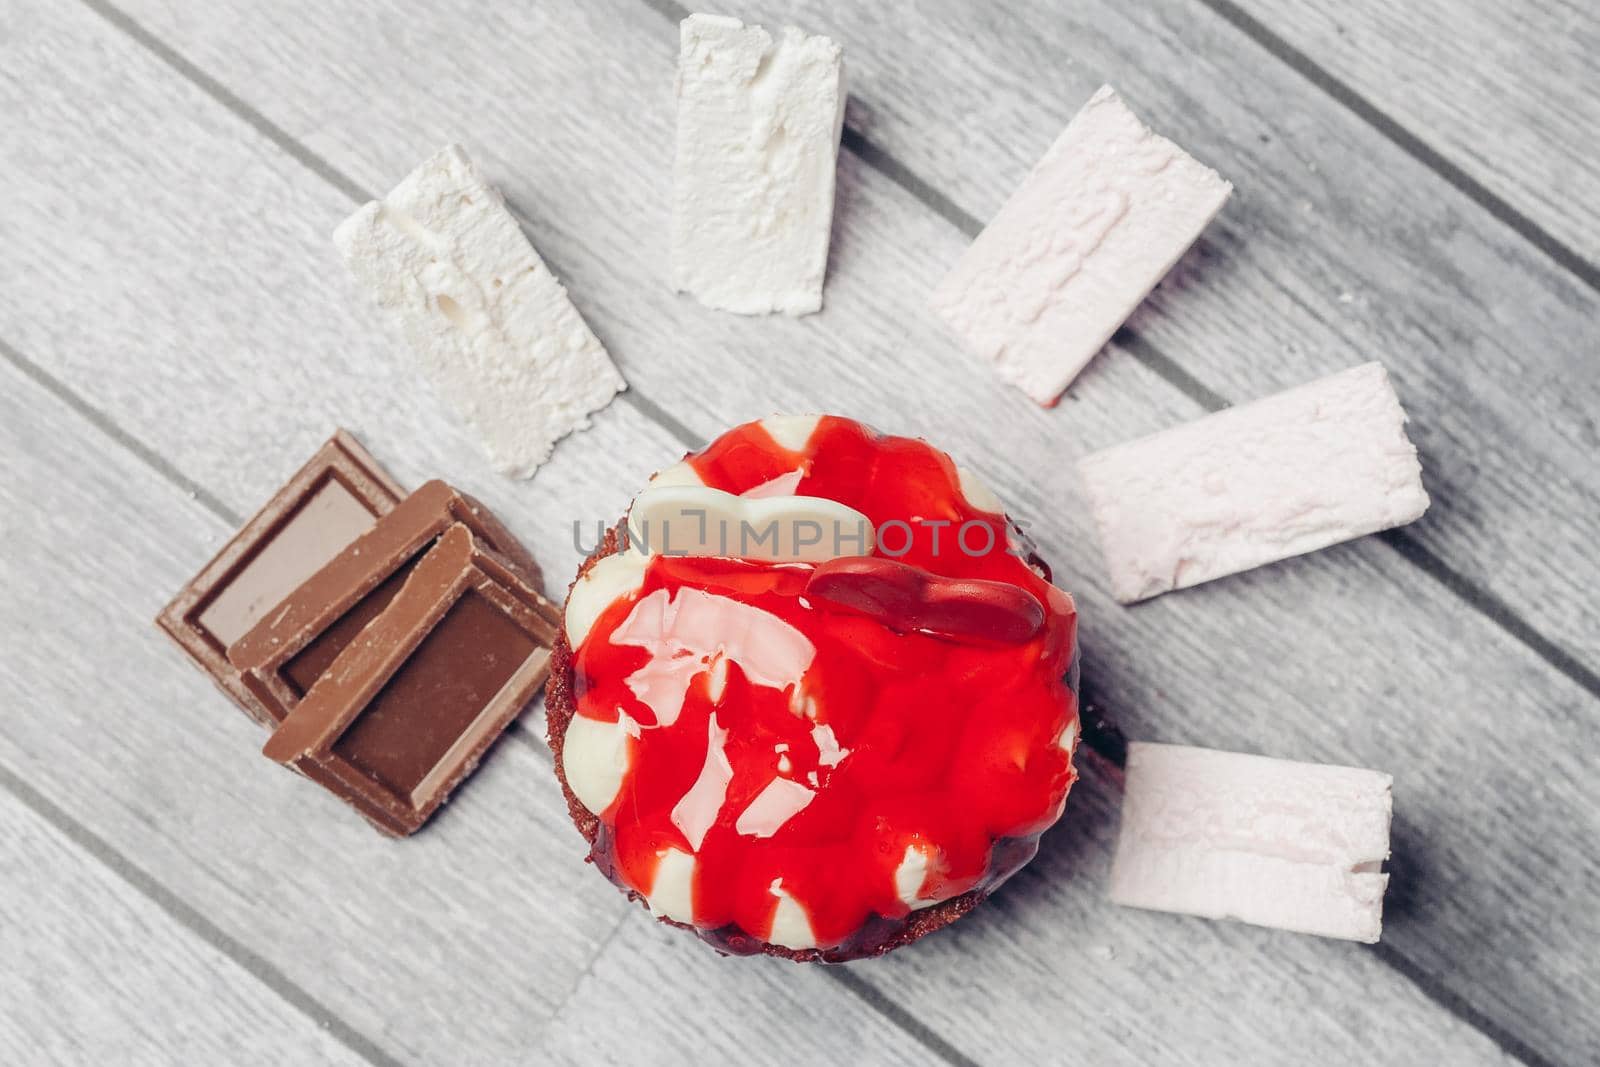 cake red velvet sweets dessert discrepancies snack for tea. High quality photo